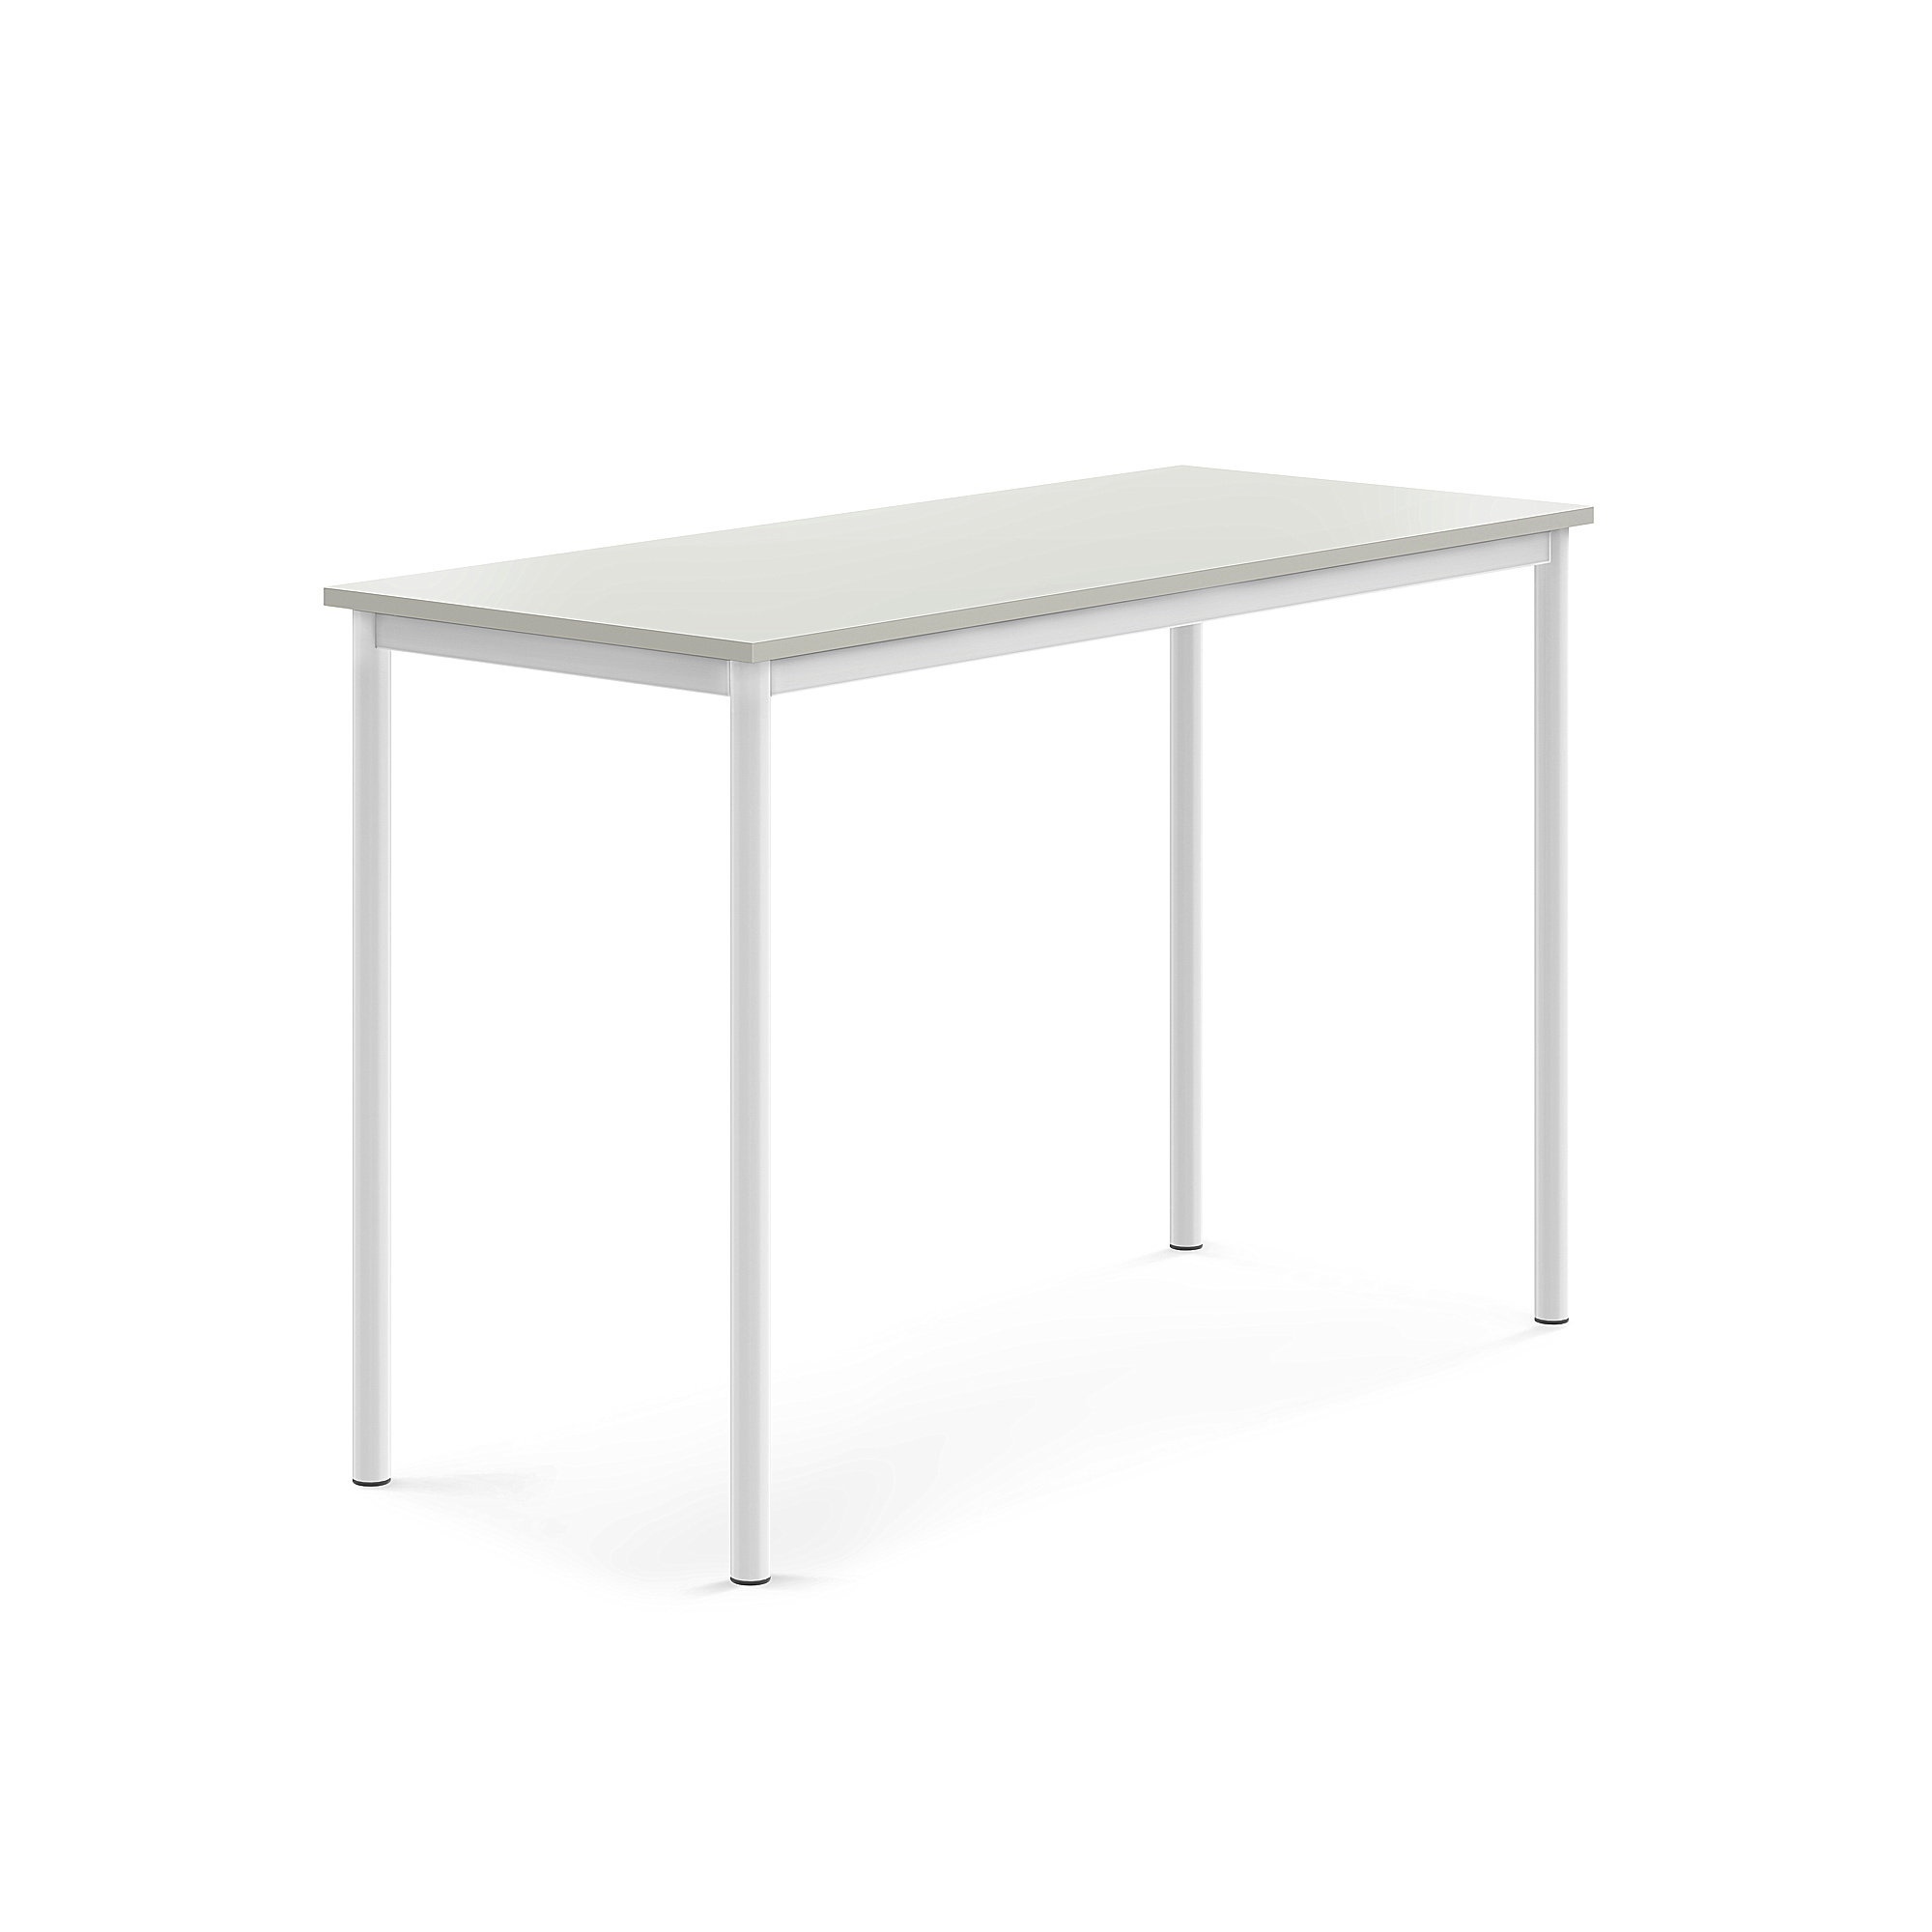 Stůl SONITUS, 1400x600x900 mm, bílé nohy, HPL deska tlumící hluk, šedá